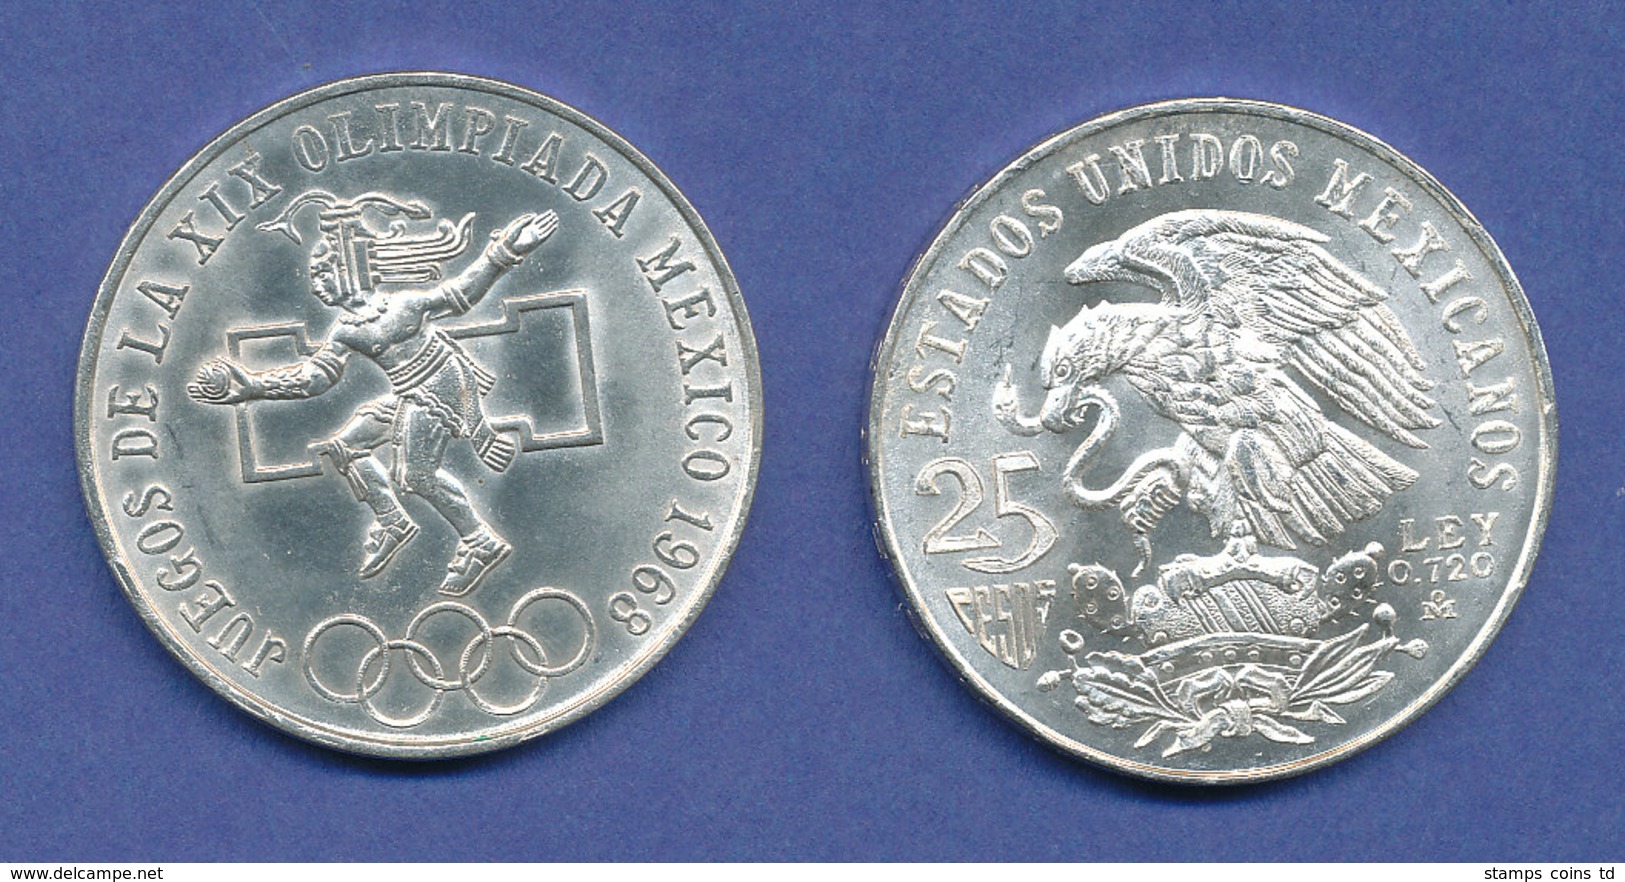 Mexiko Silber-Münze Olympische Spiele Mexico-City 1968, 22,5g 720er Silber - Mexico